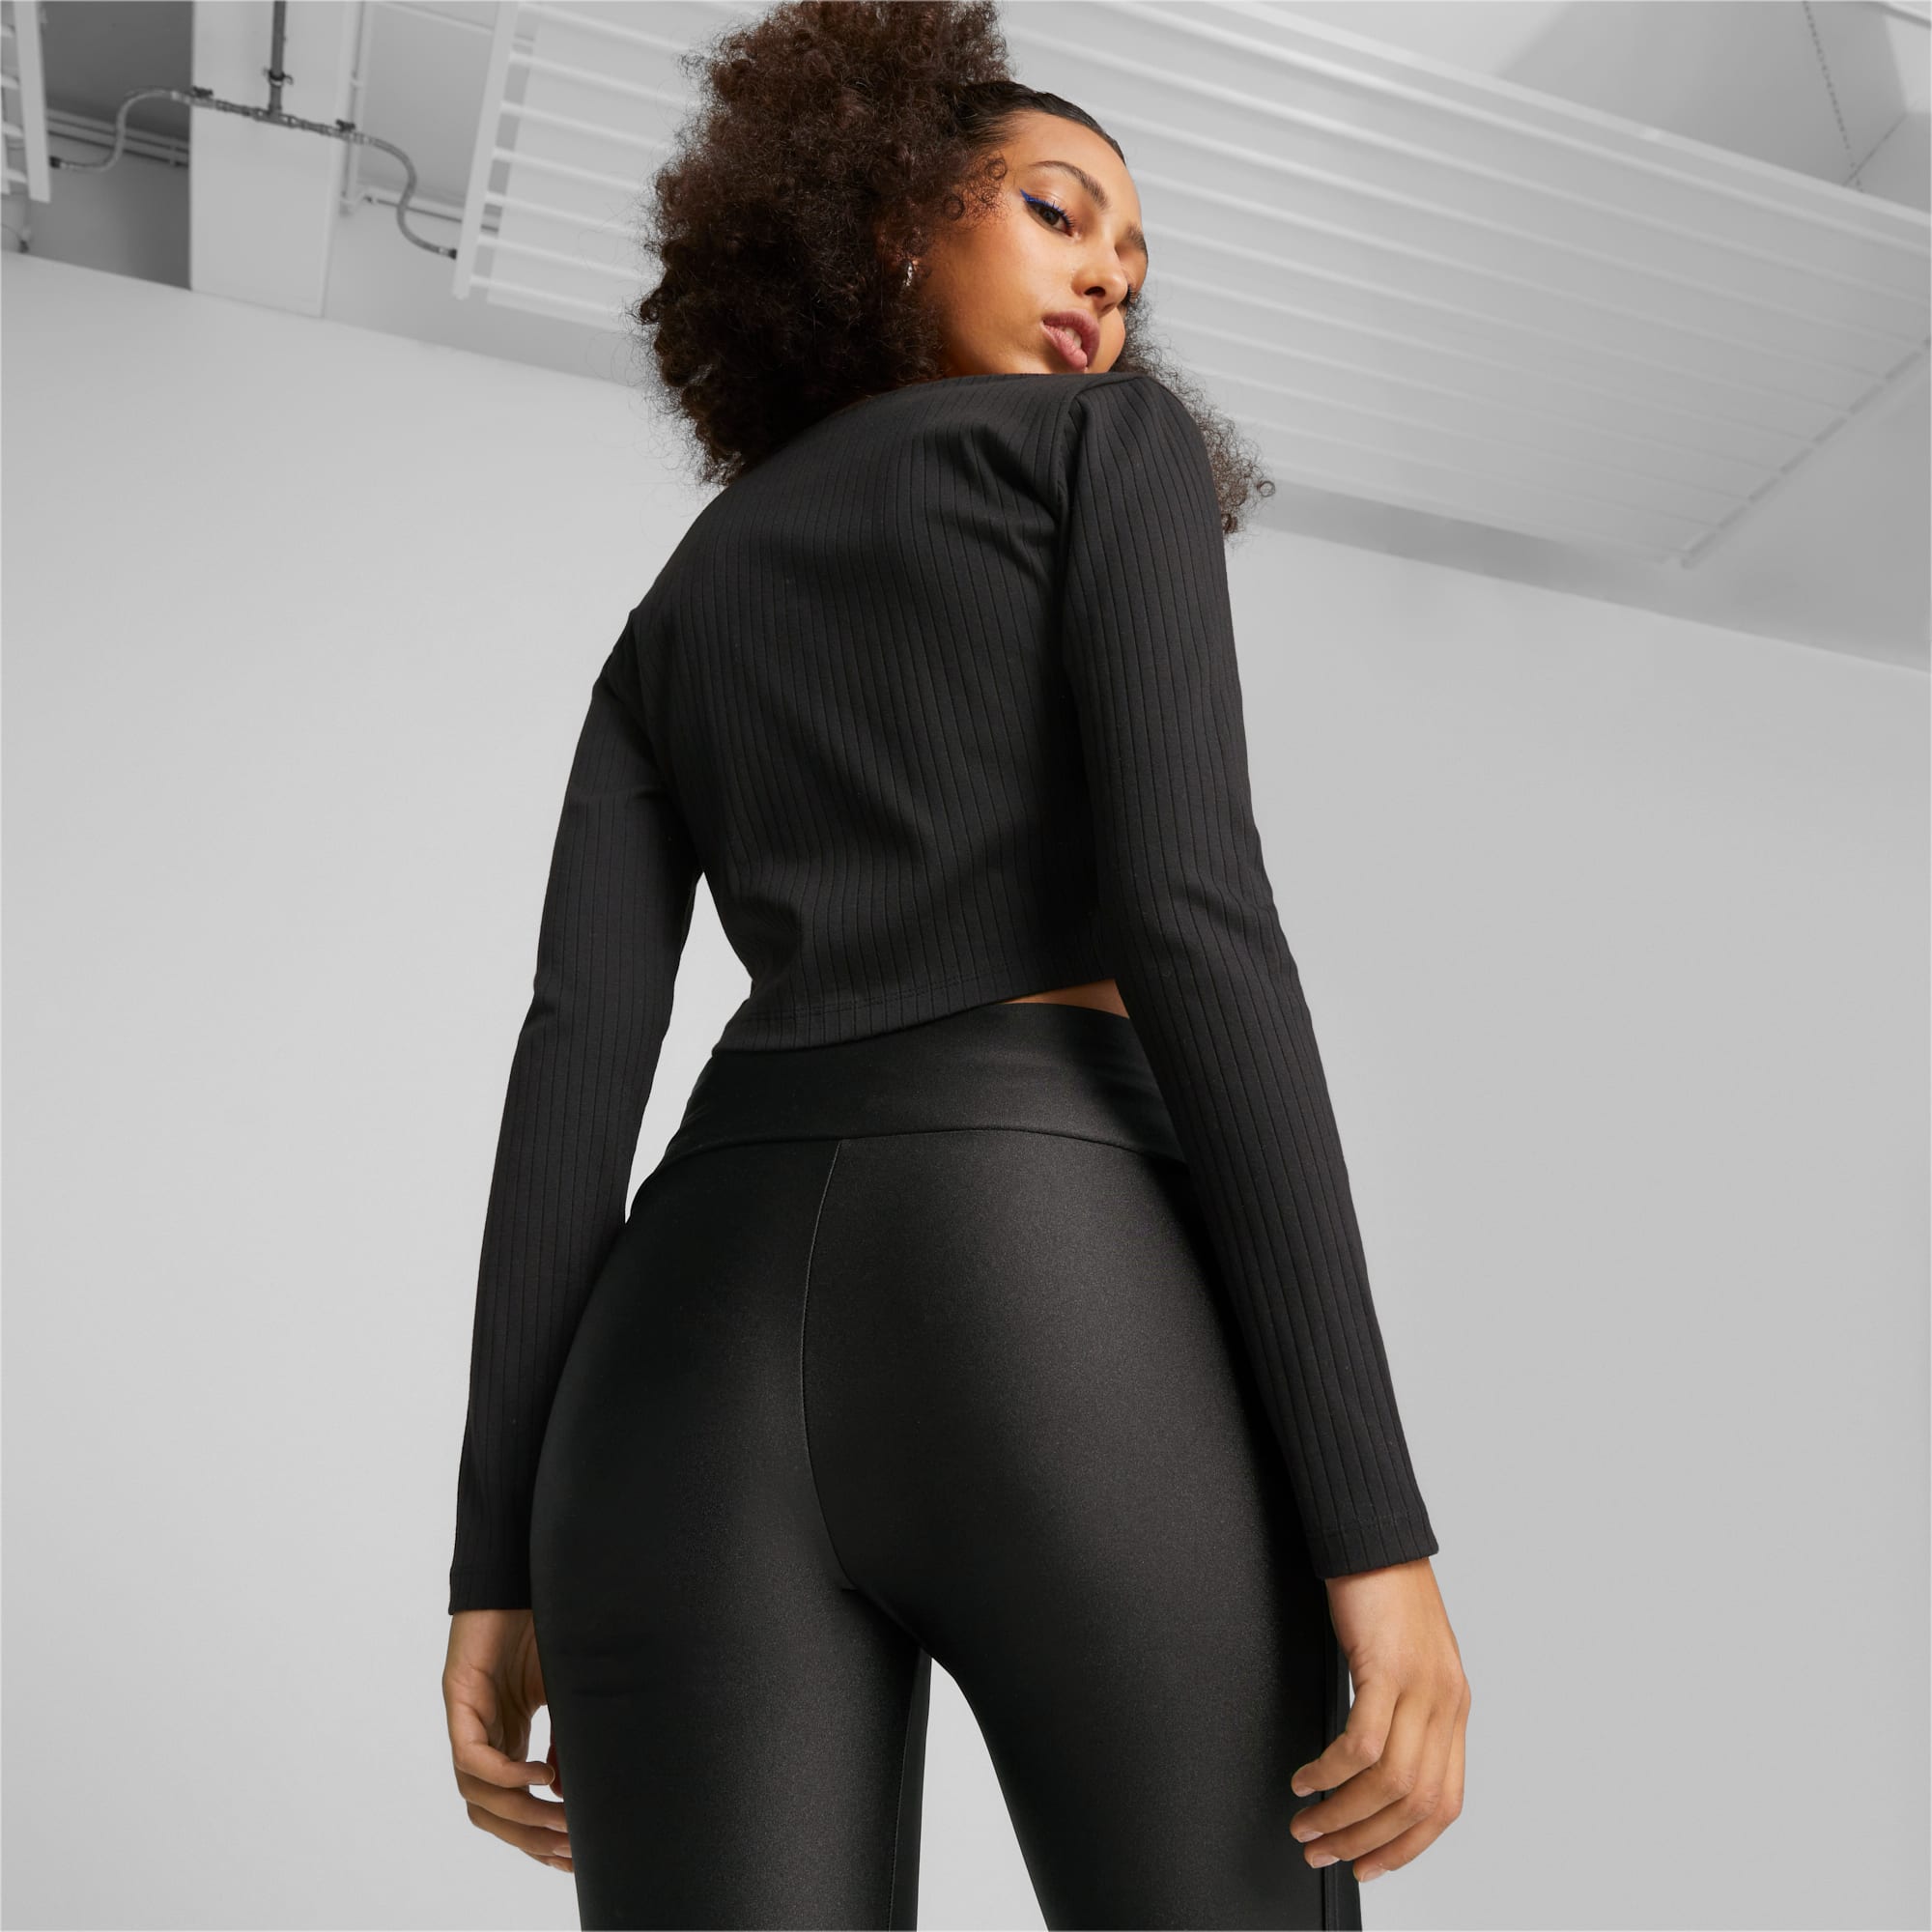 PUMA Classics Women's Ribbed Long Sleeve Shirt, Black, Size L, Clothing